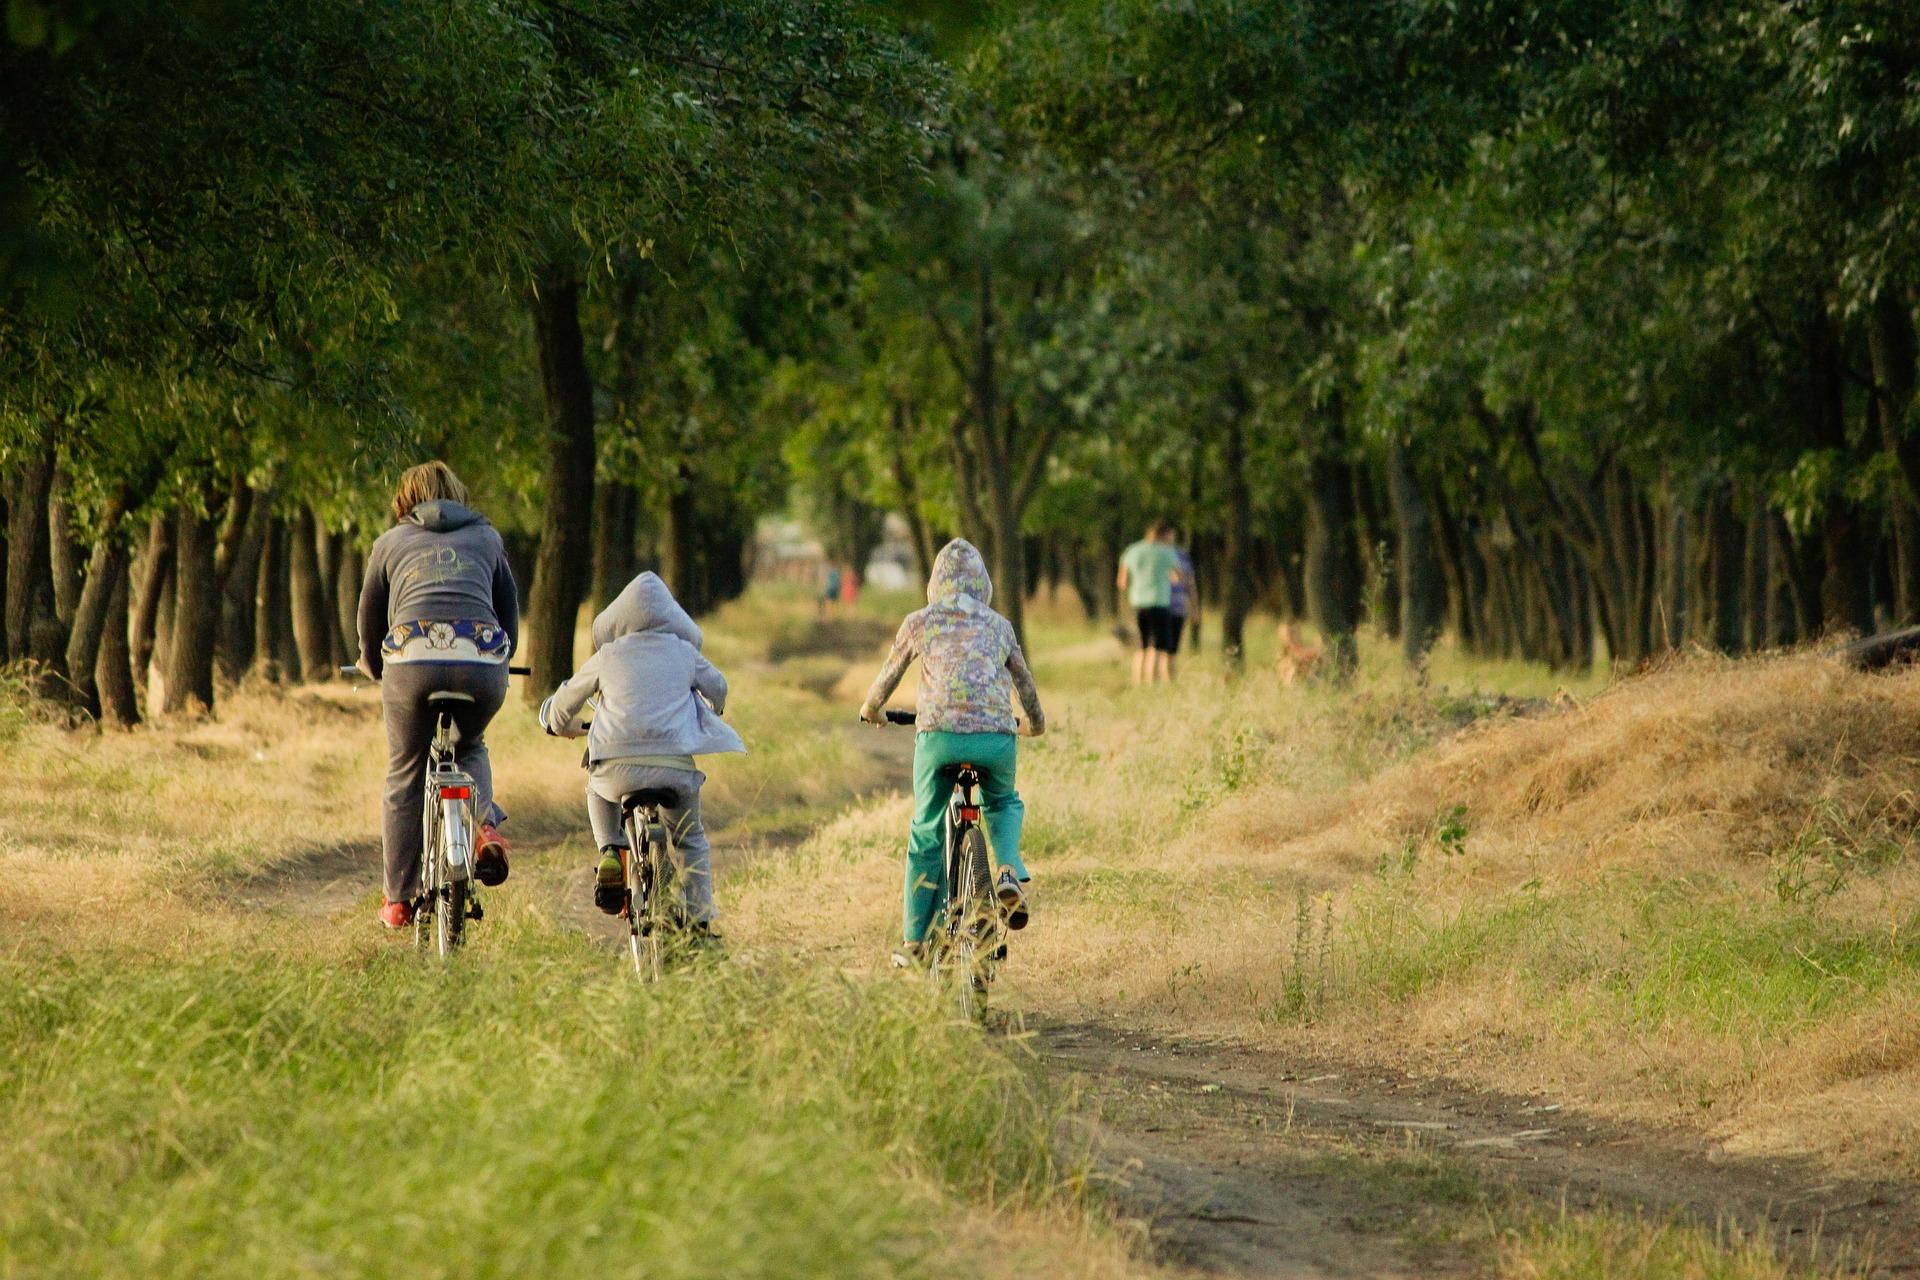 familia en bicicleta por un bosque